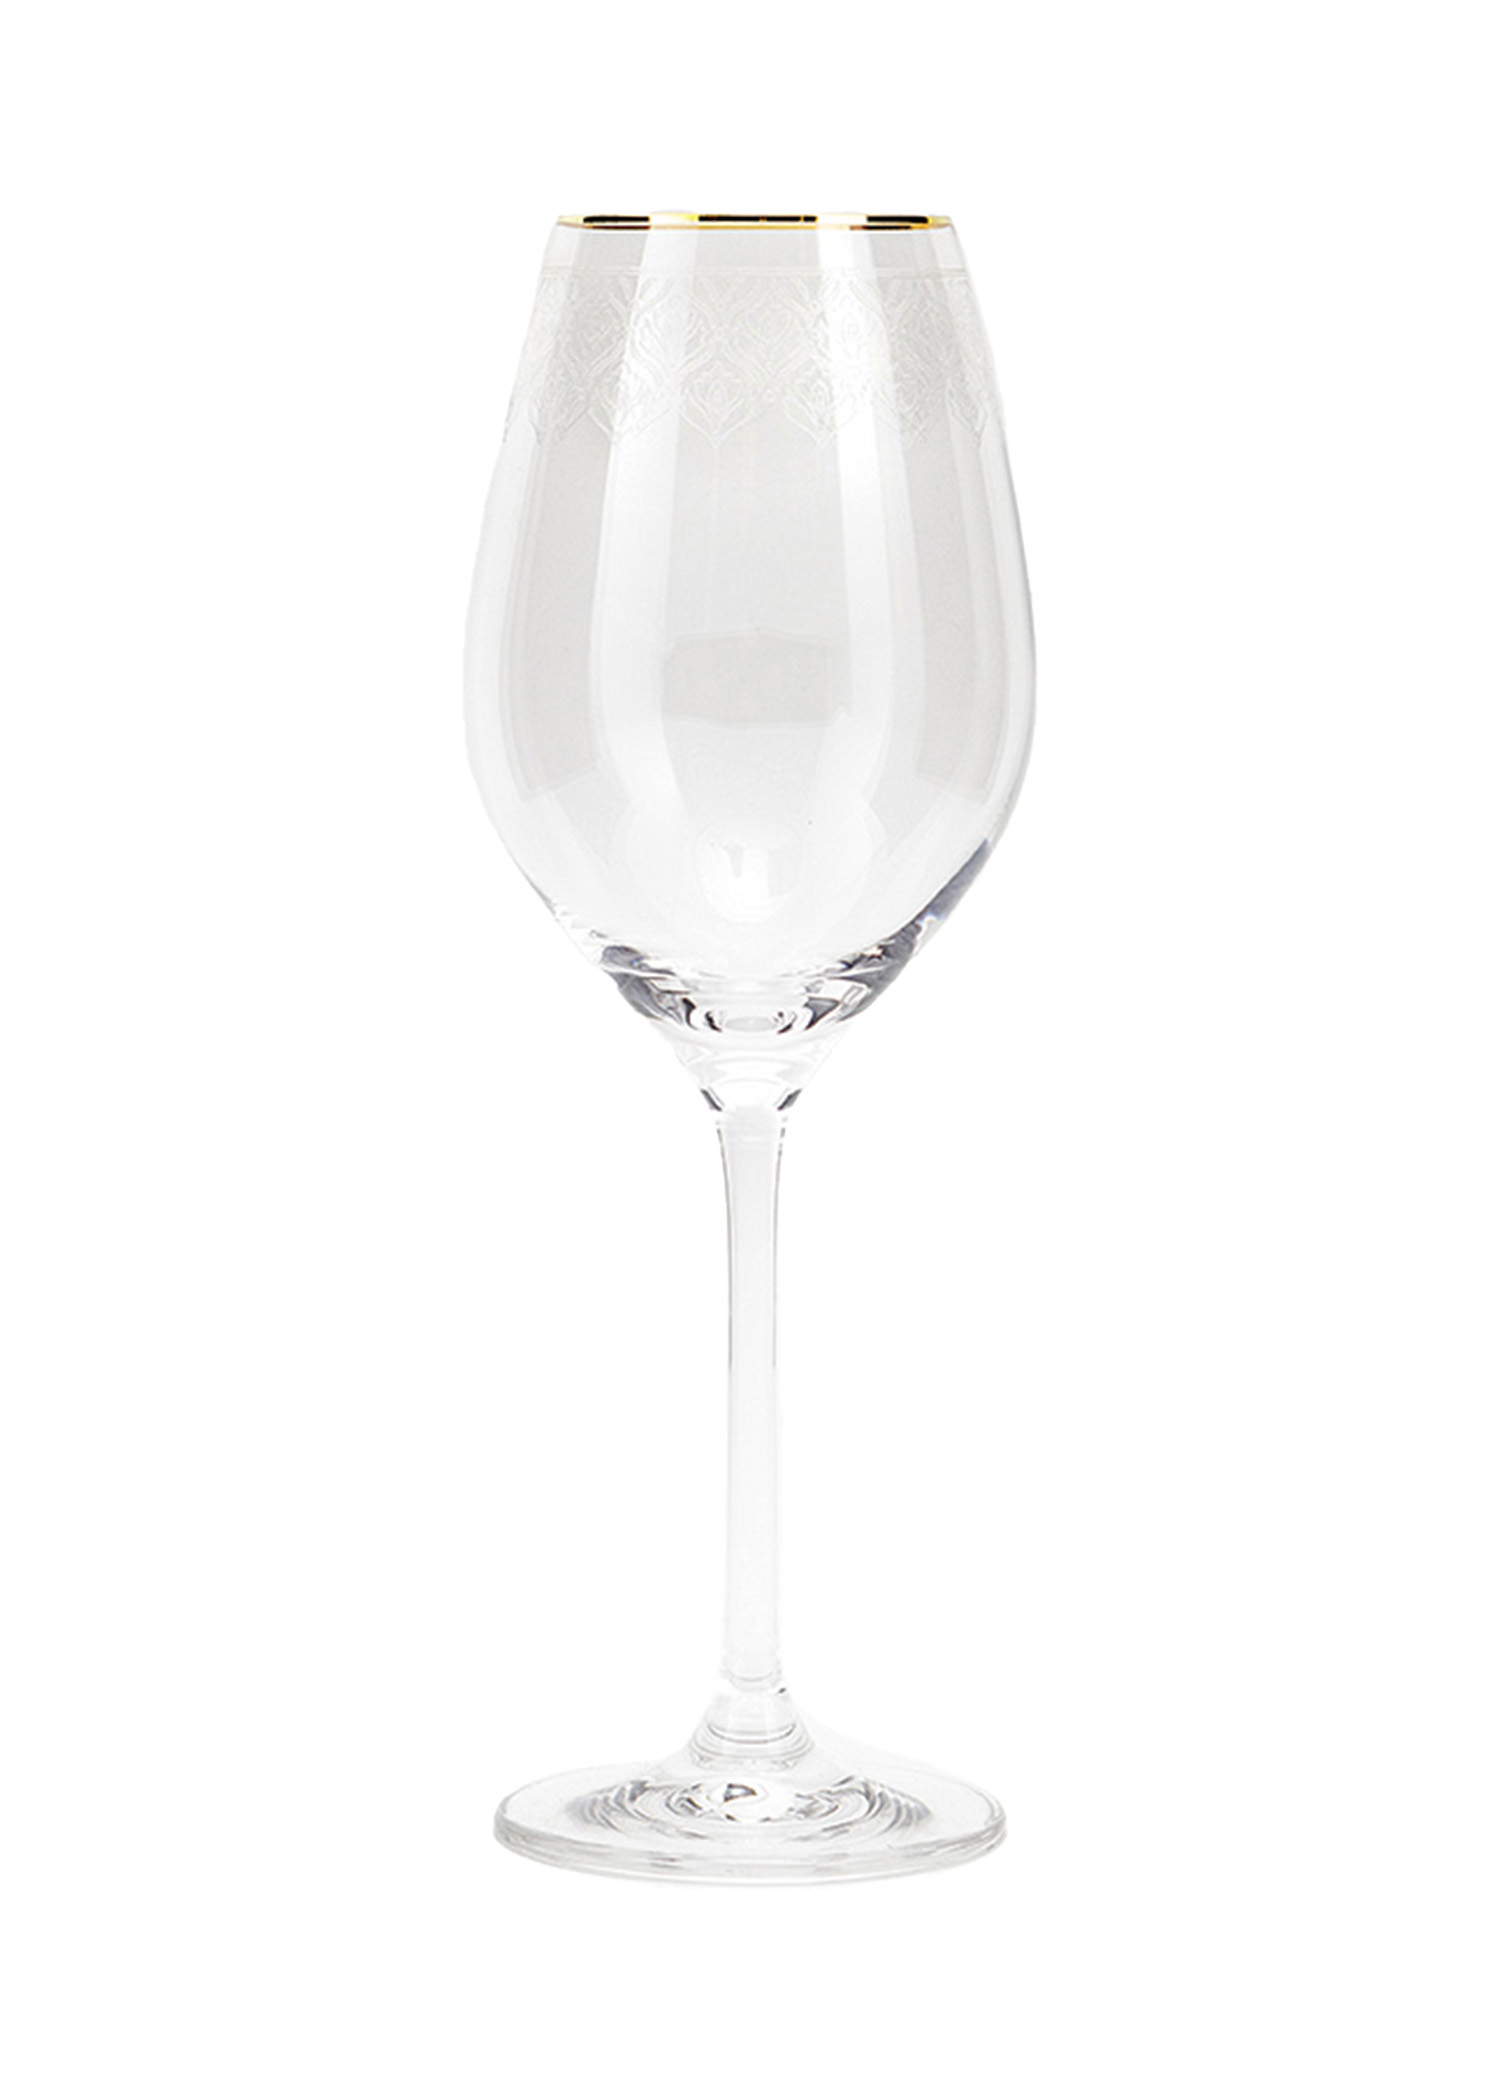 White wine crystal glass